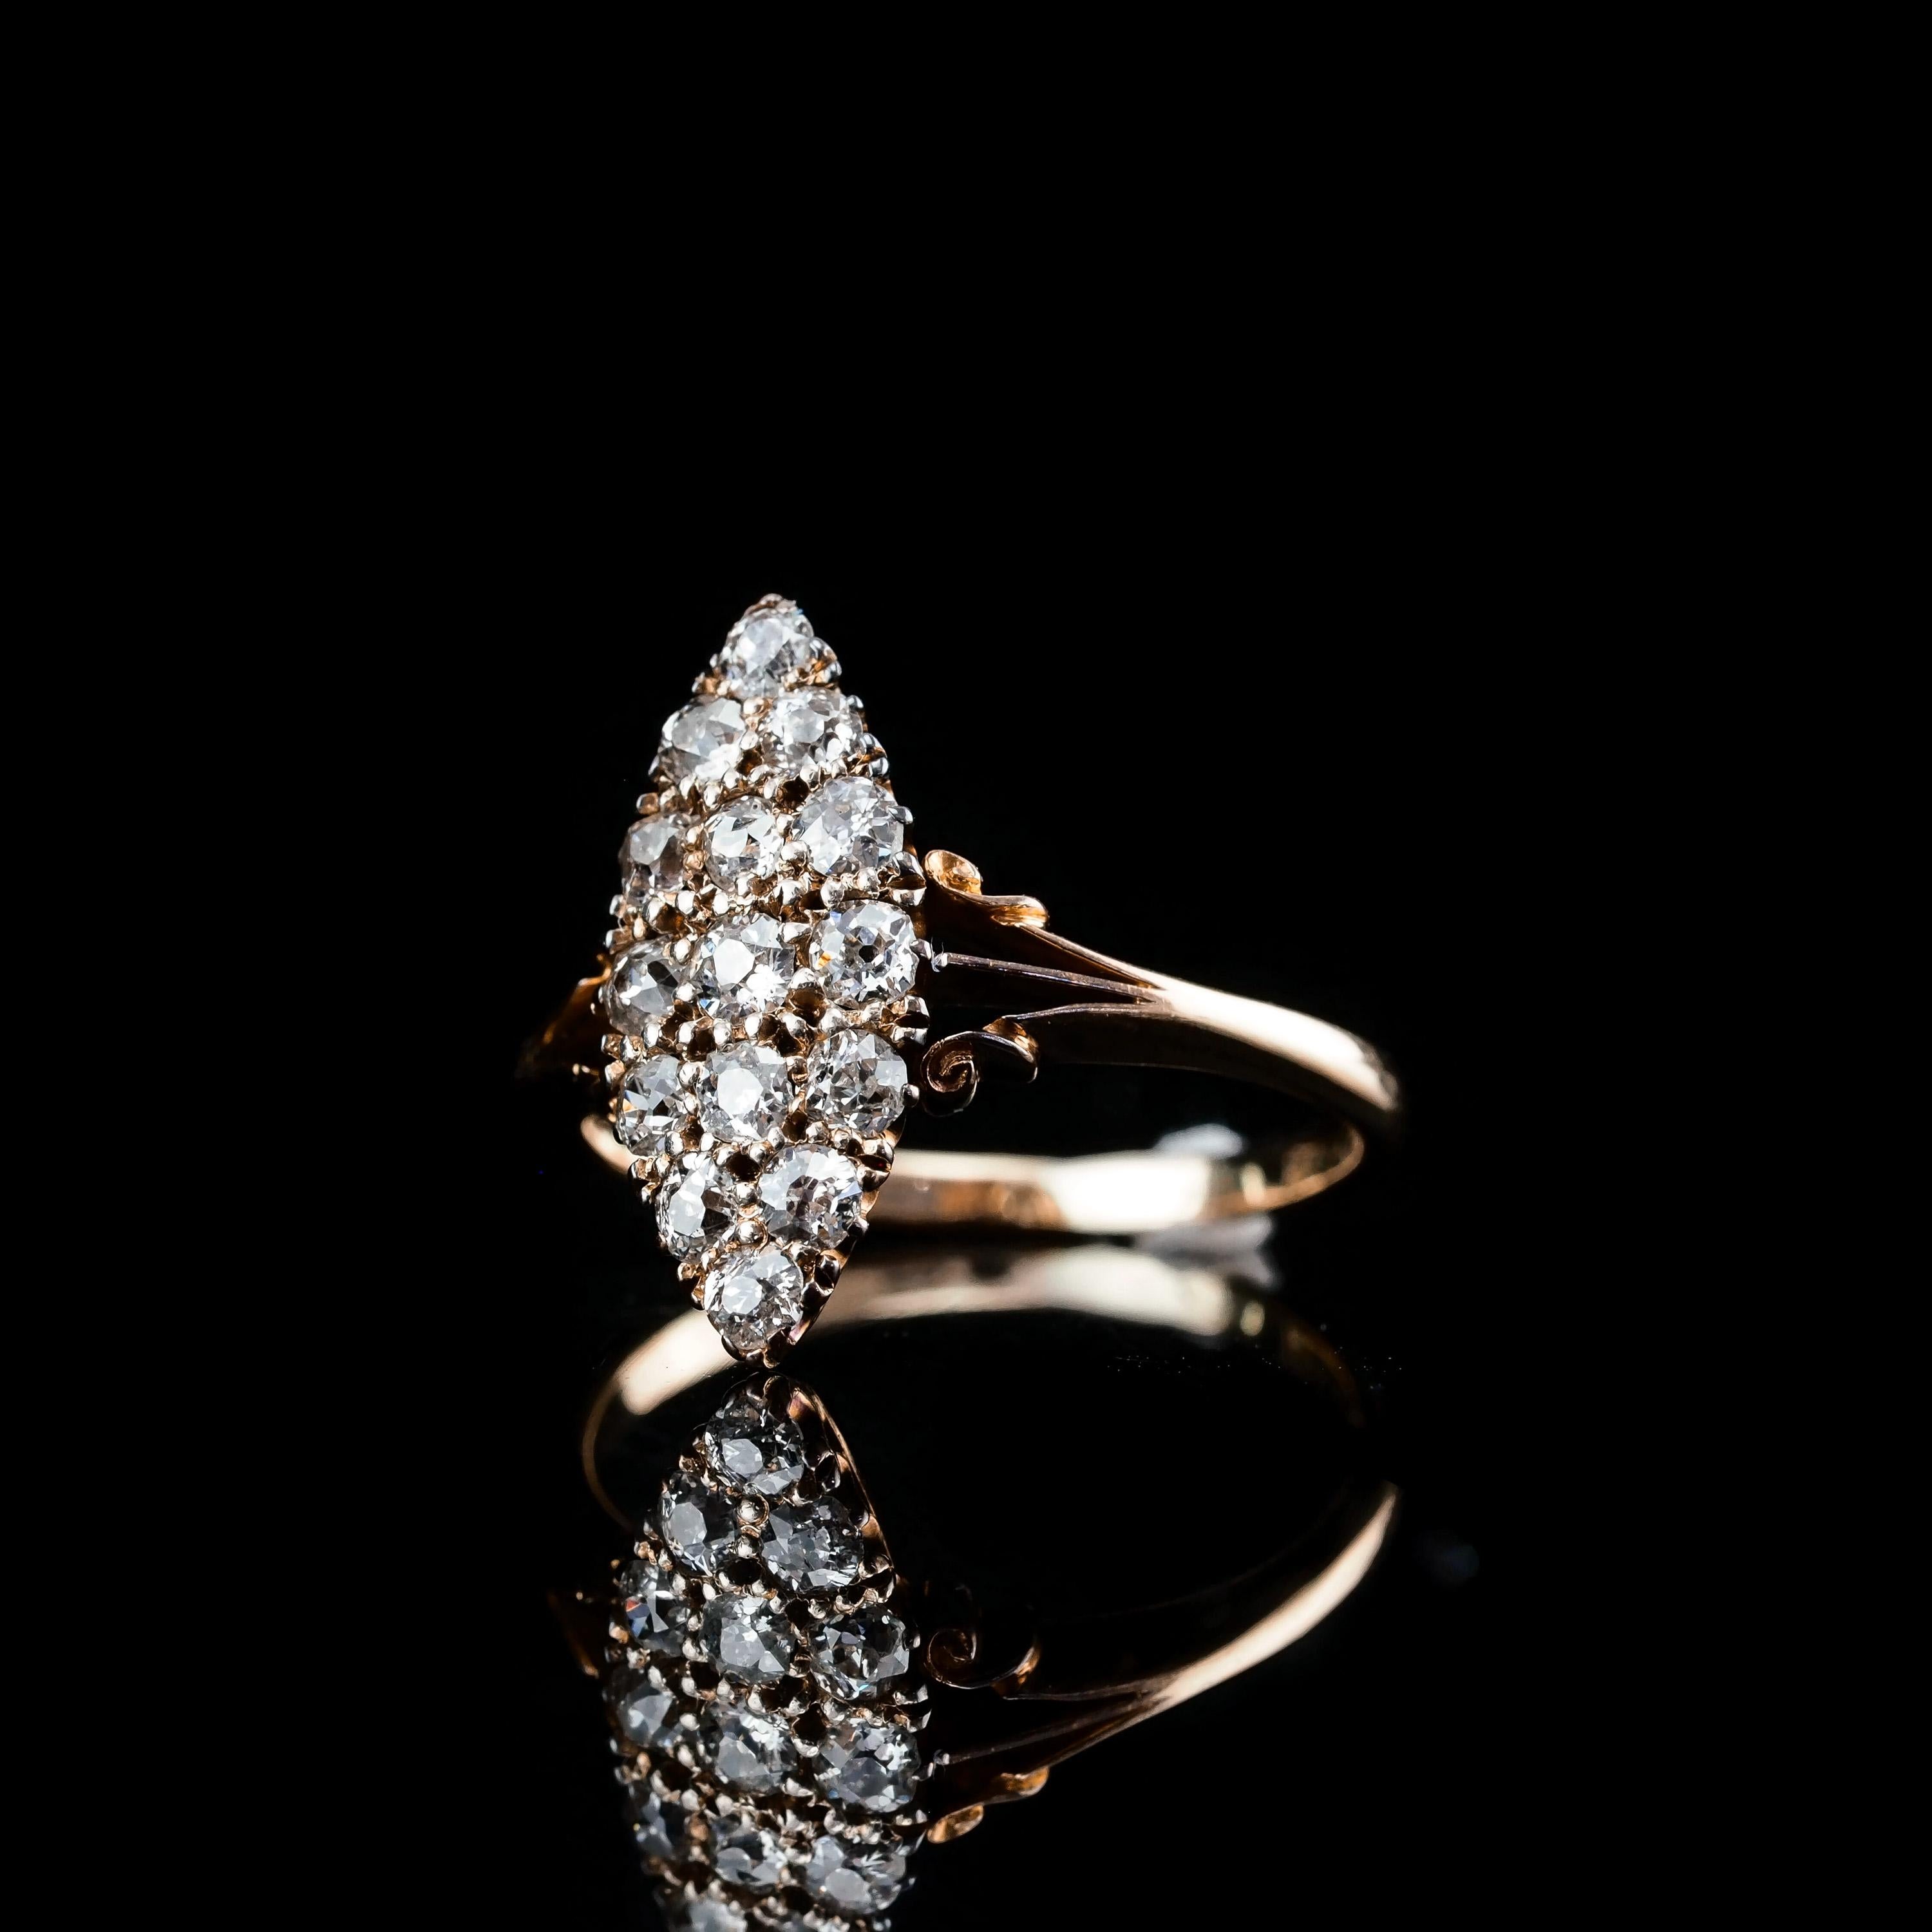 Antique Diamond Ring 18K Gold Navette/Cluster Design - c.1900s For Sale 4